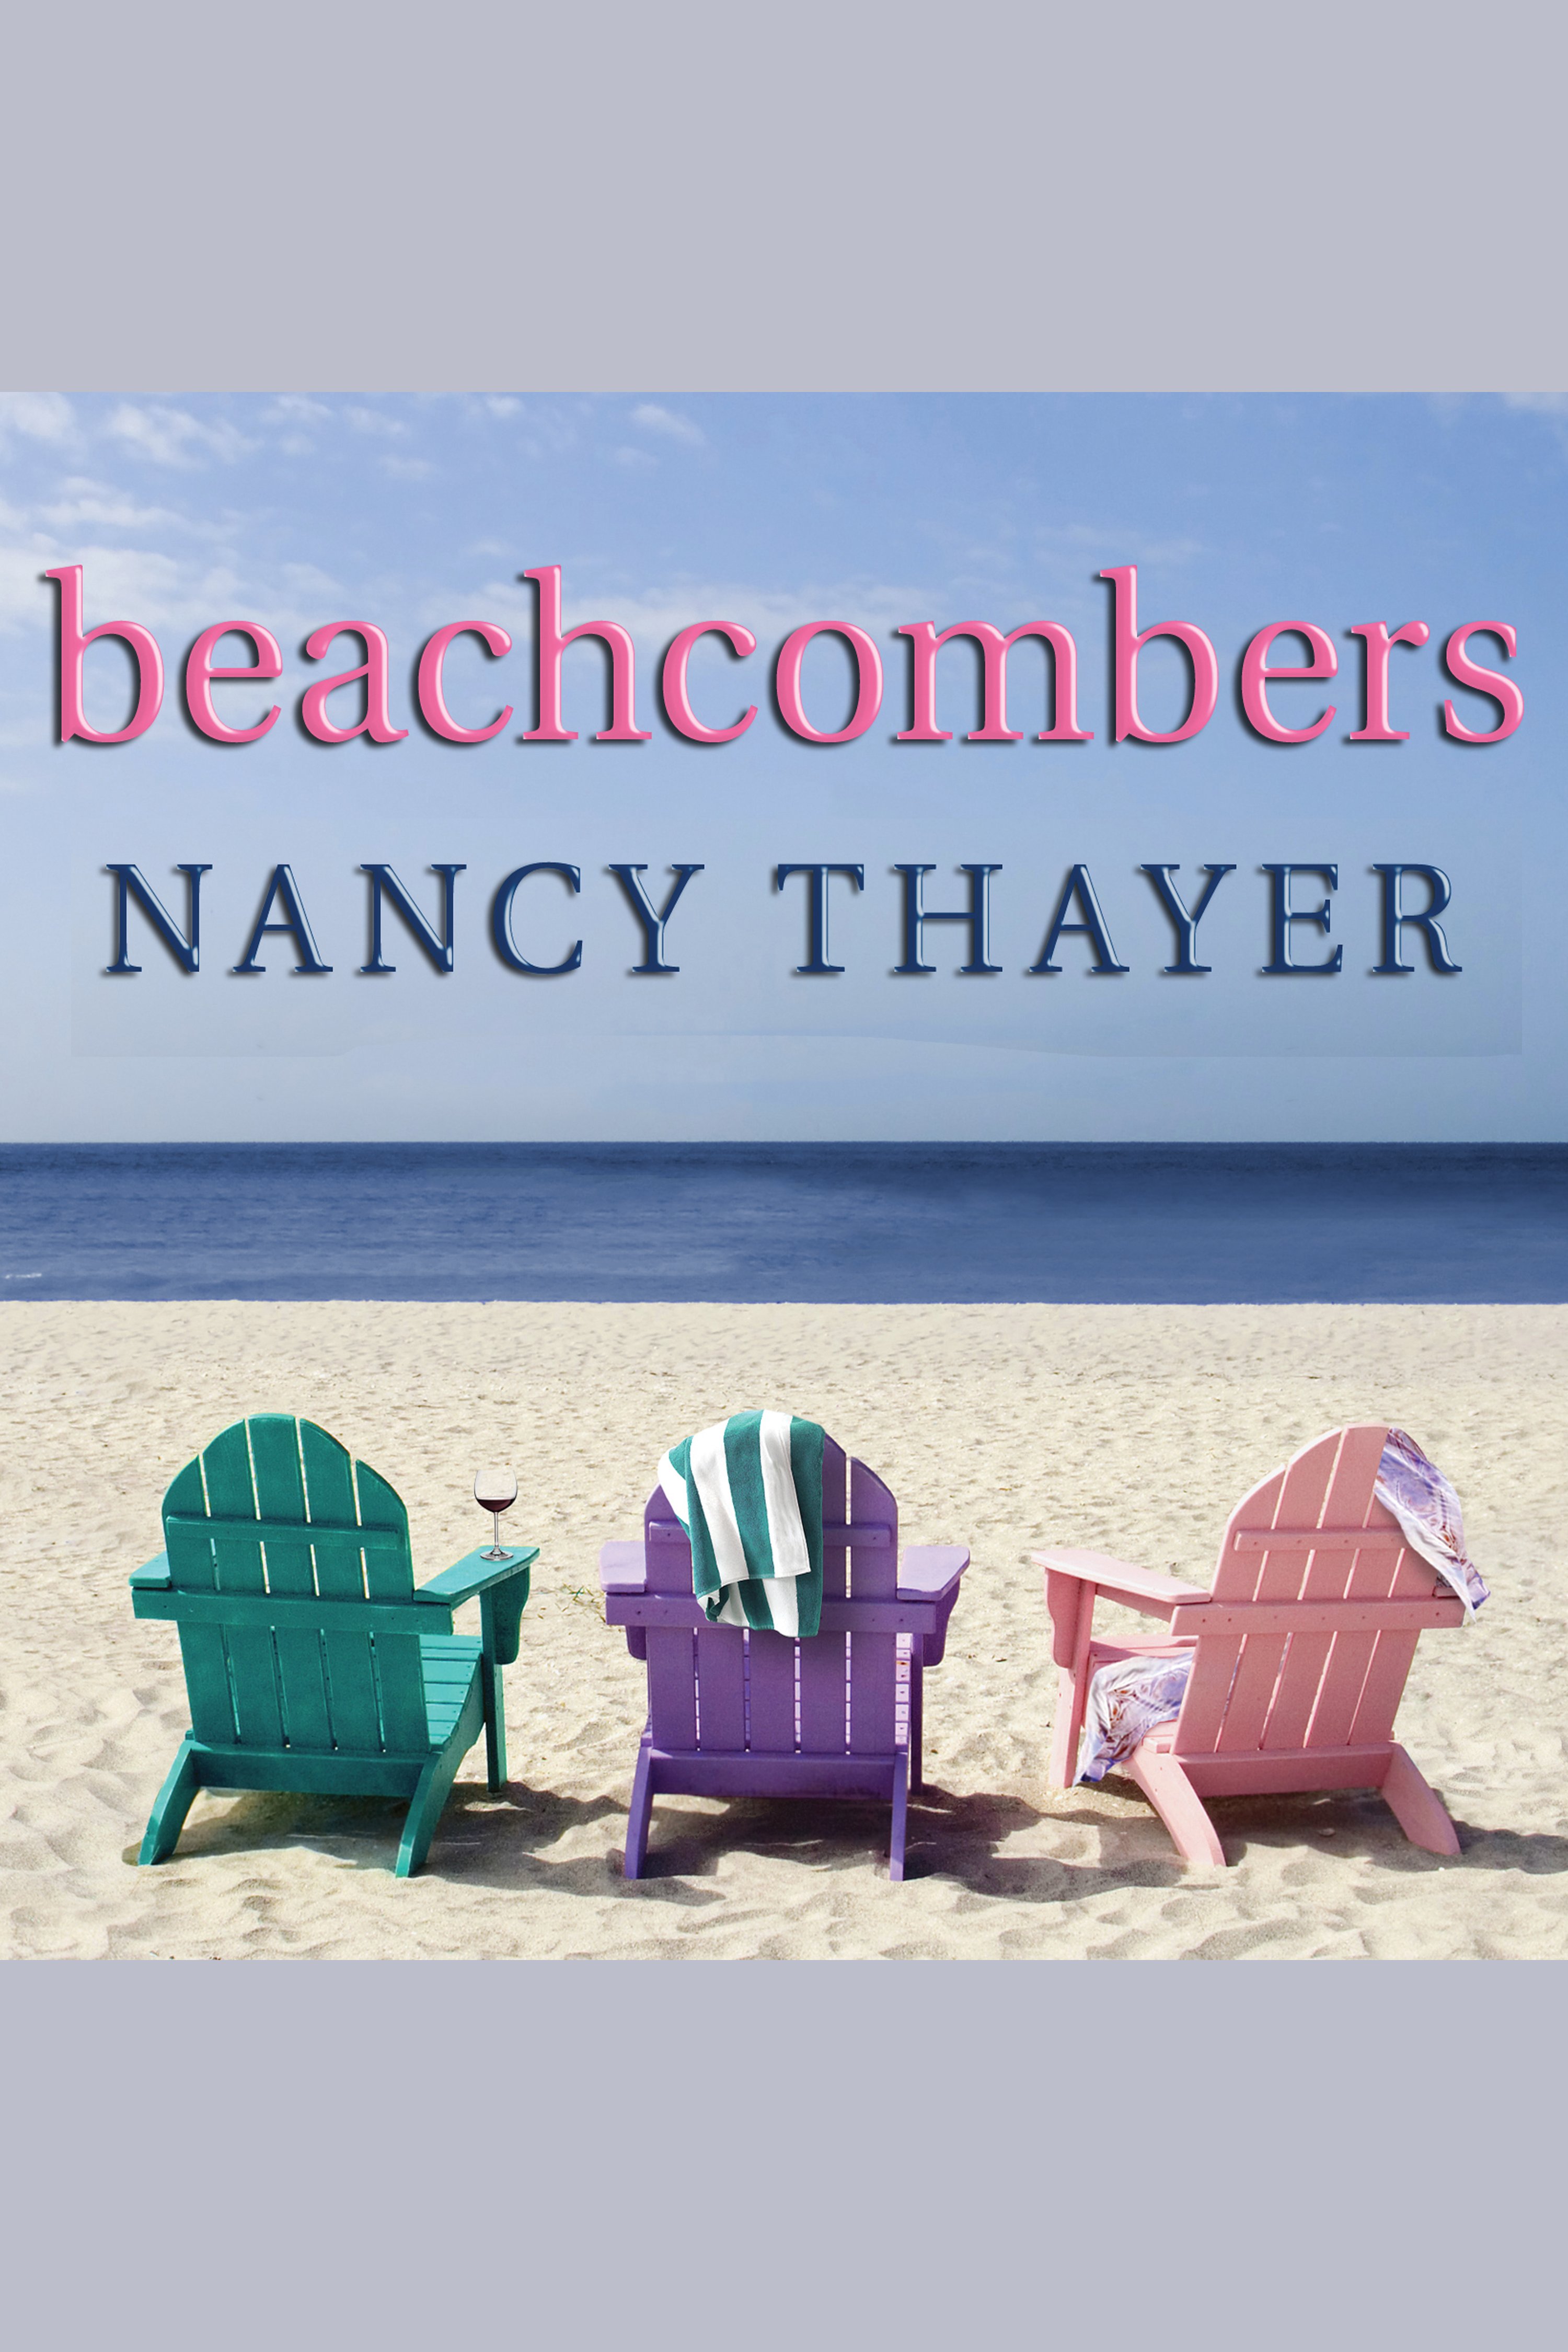 Beachcombers cover image